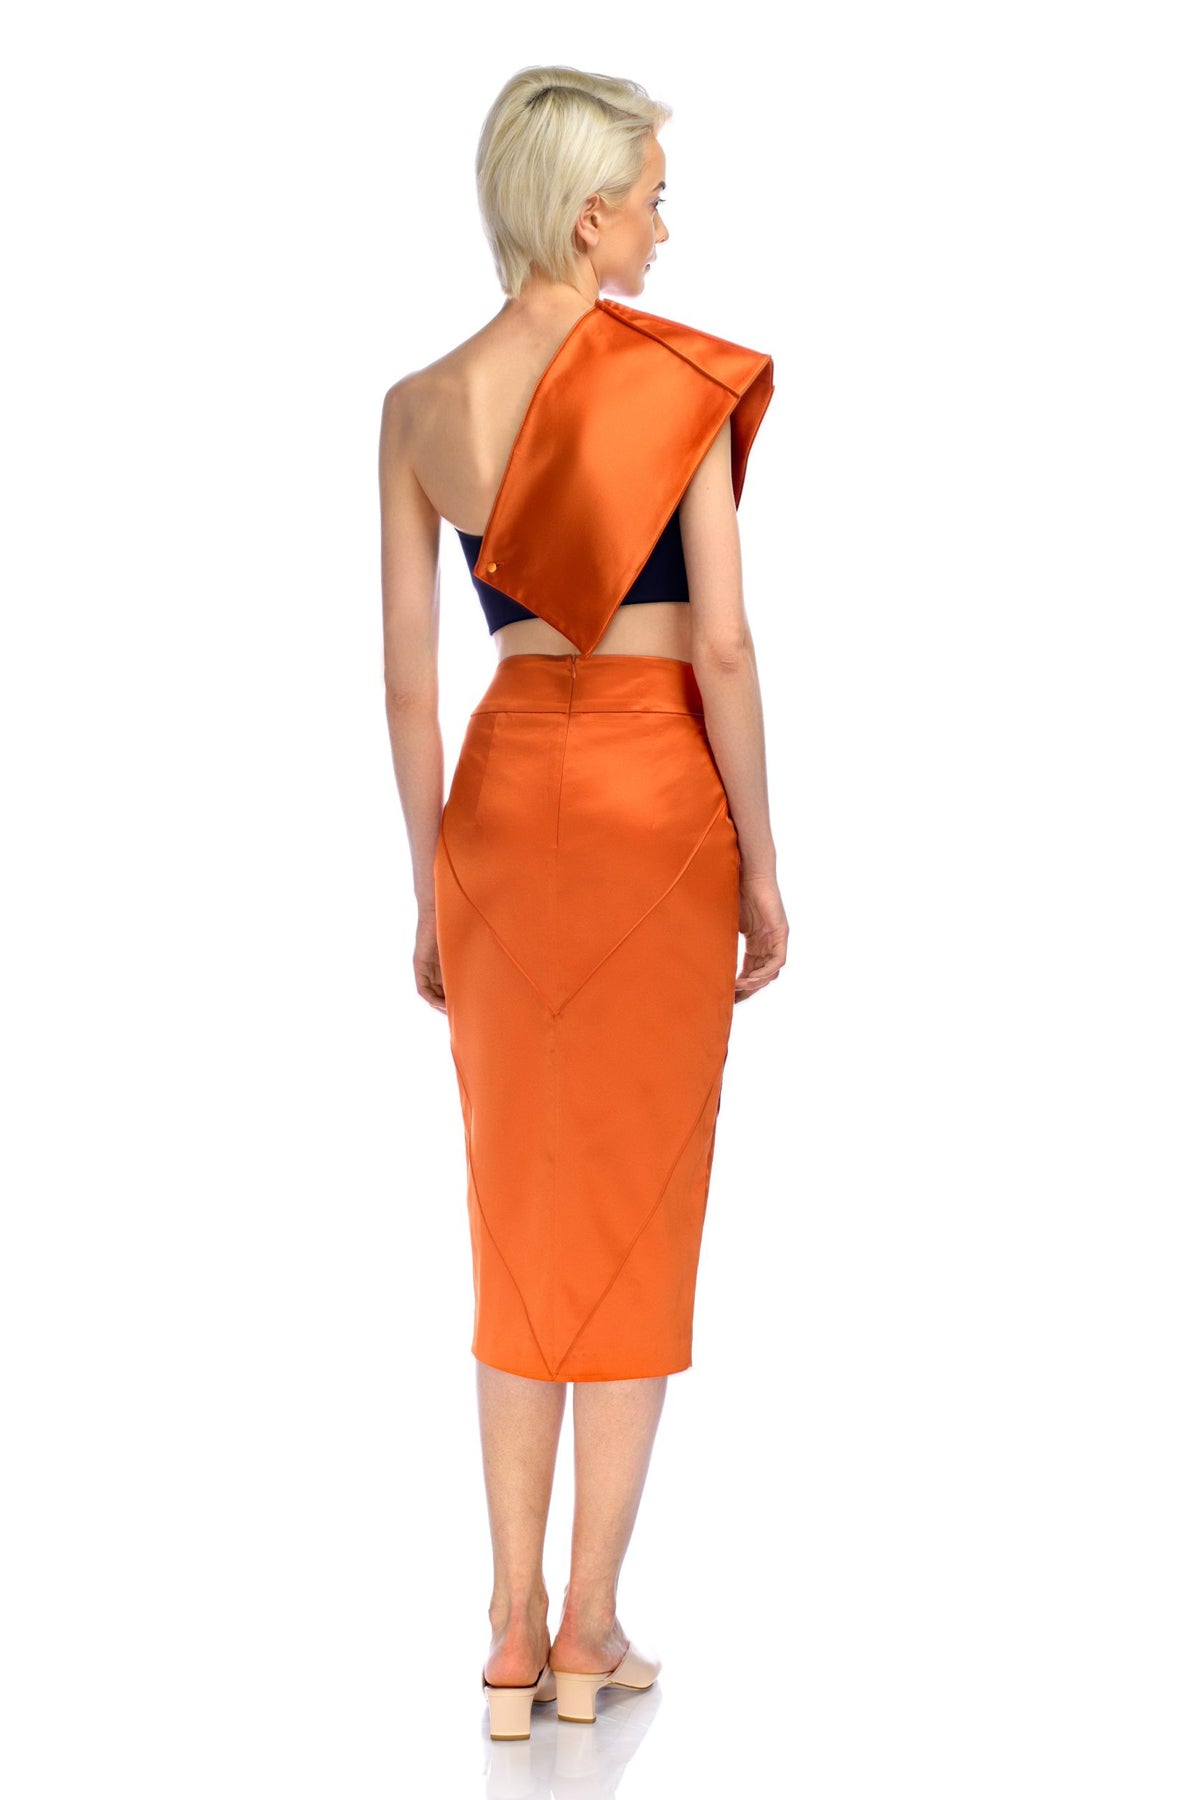 Fusta portocalie Eva Confident Concept Store